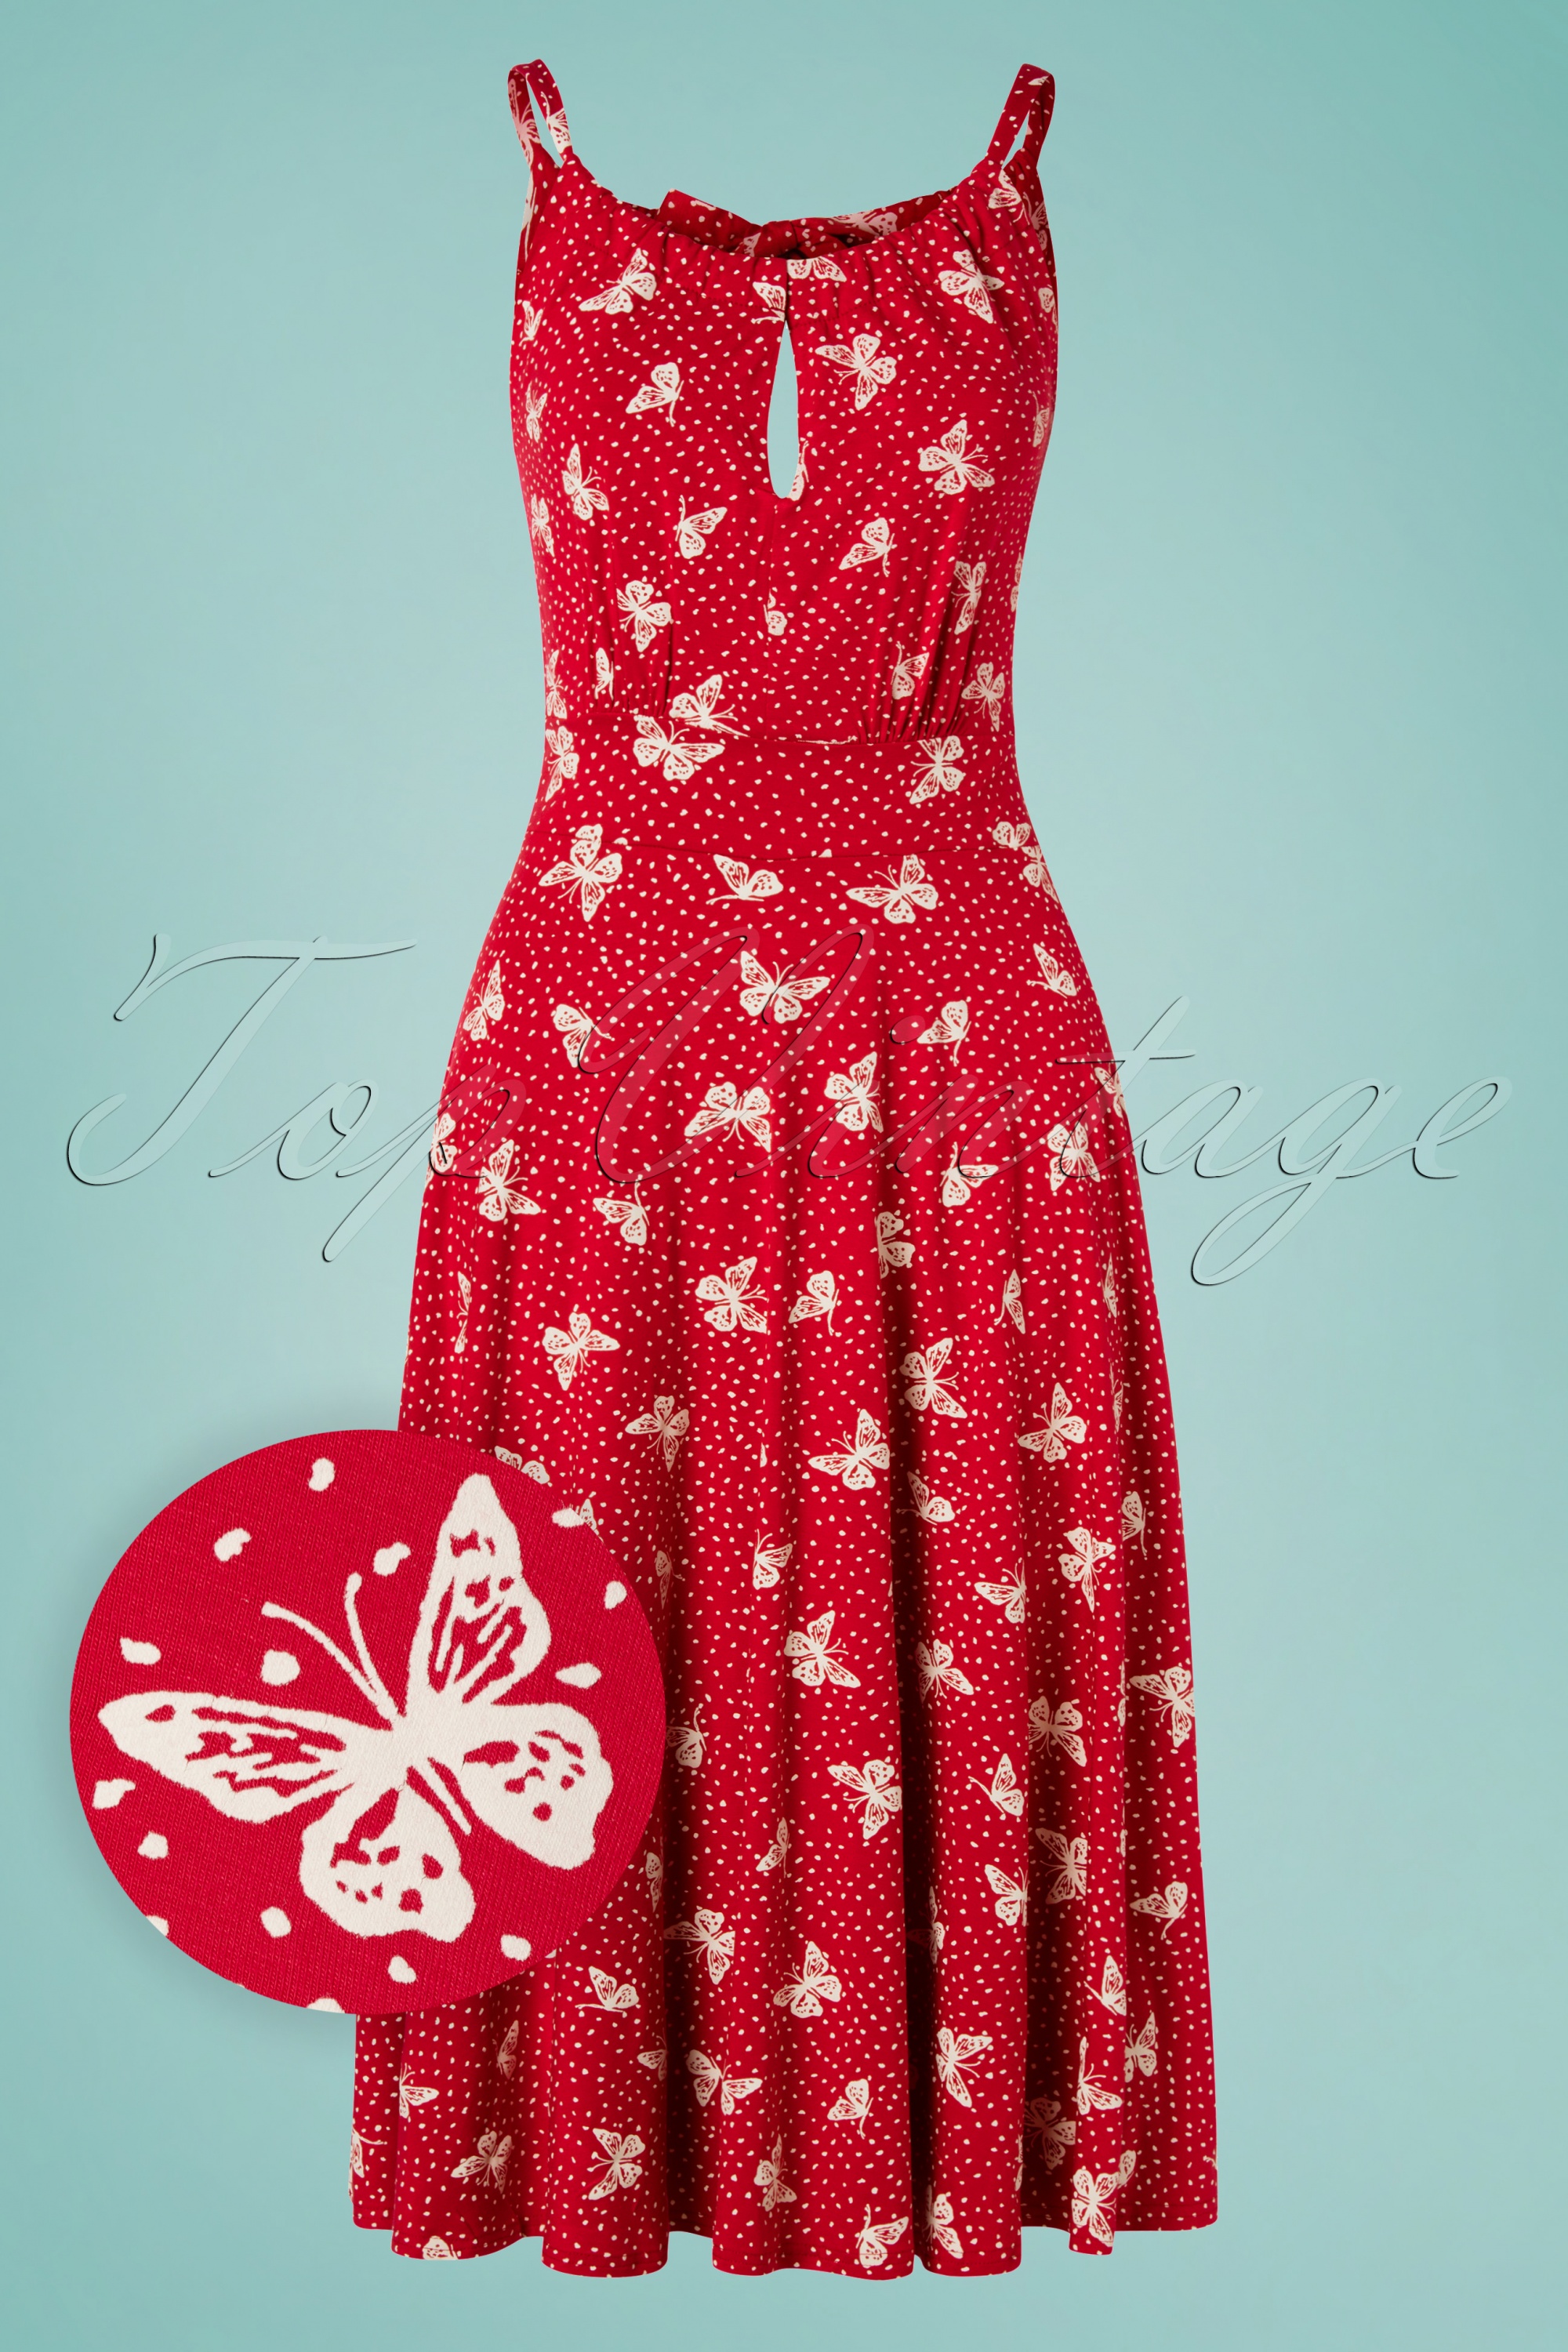 Topvintage Boutique Collection - De Alice vlinderjurk in rood en wit